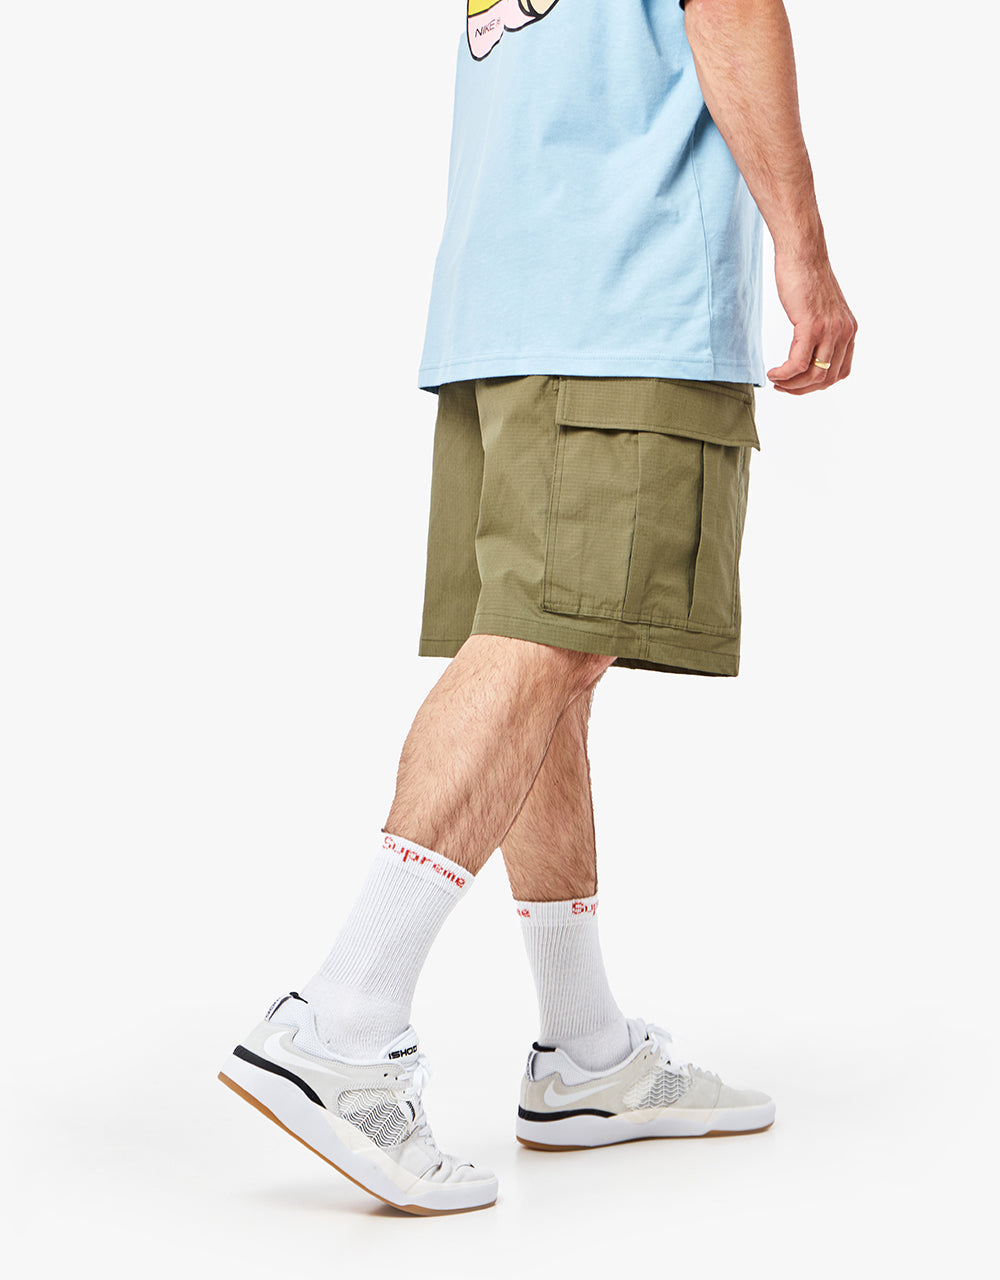 Nike SB Kearny Cargo Short - Medium Olive/White